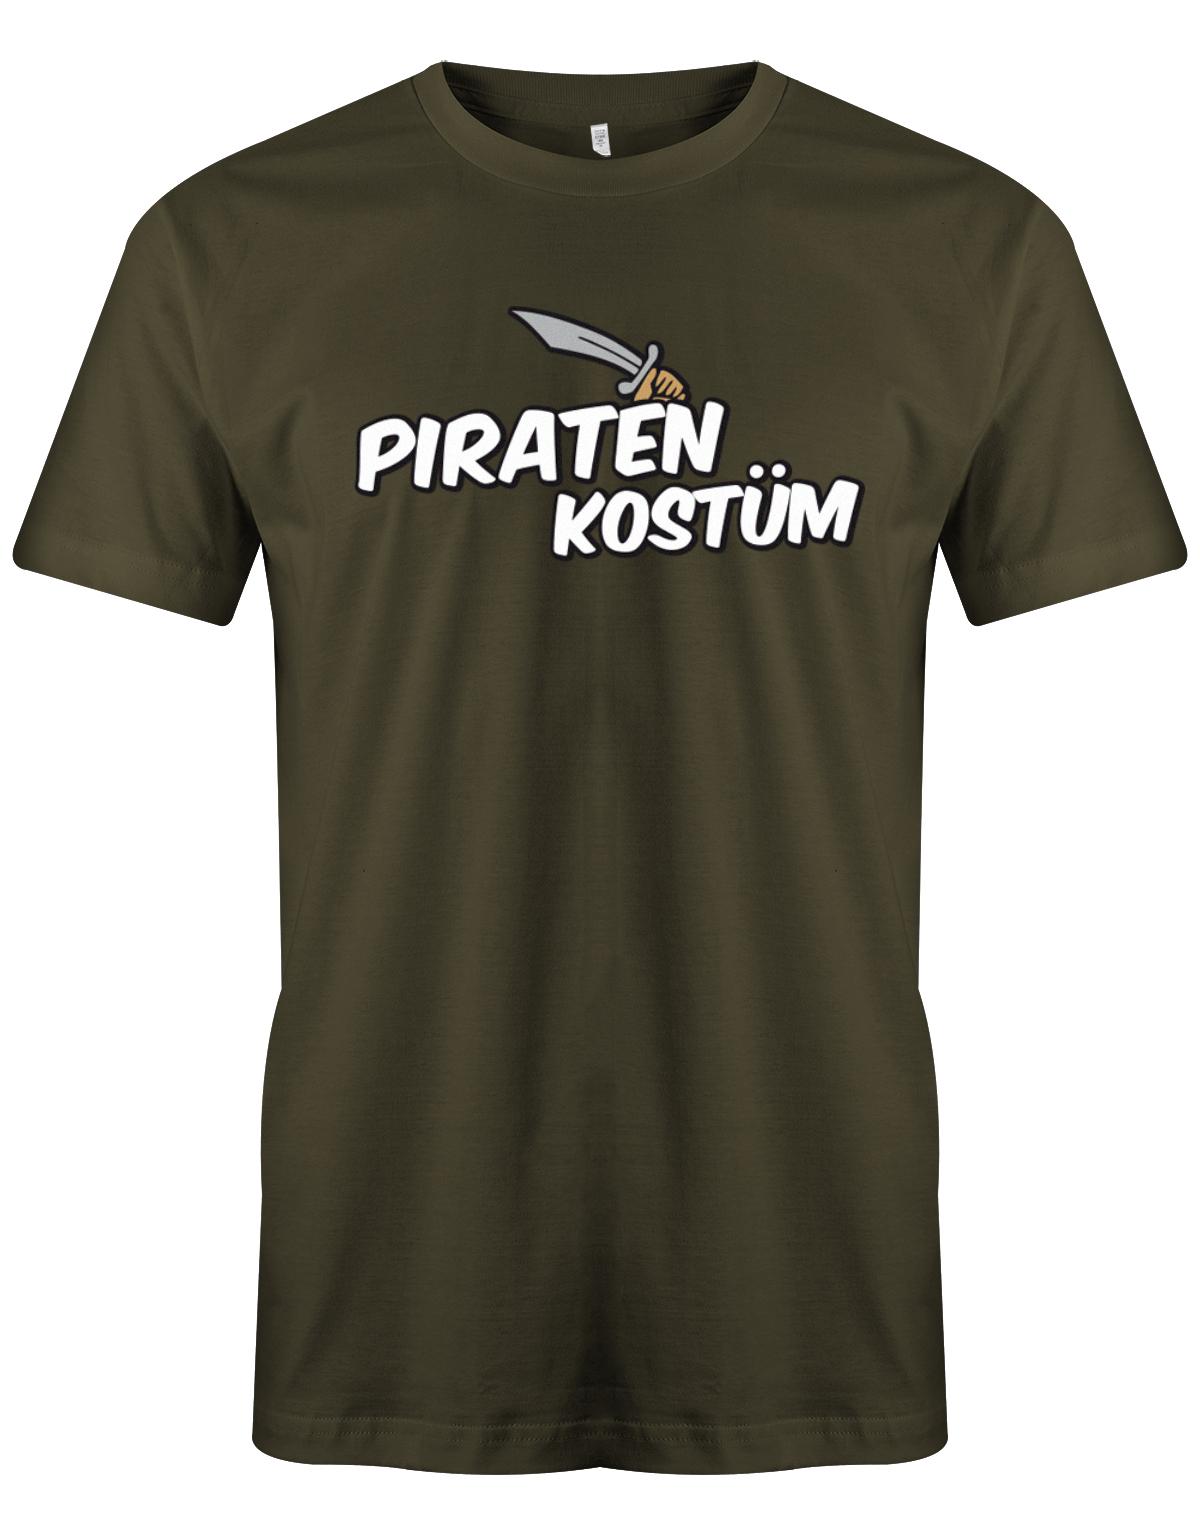 Piraten-Kost-m-Fasching-Karneval-herren-Shirt-Army